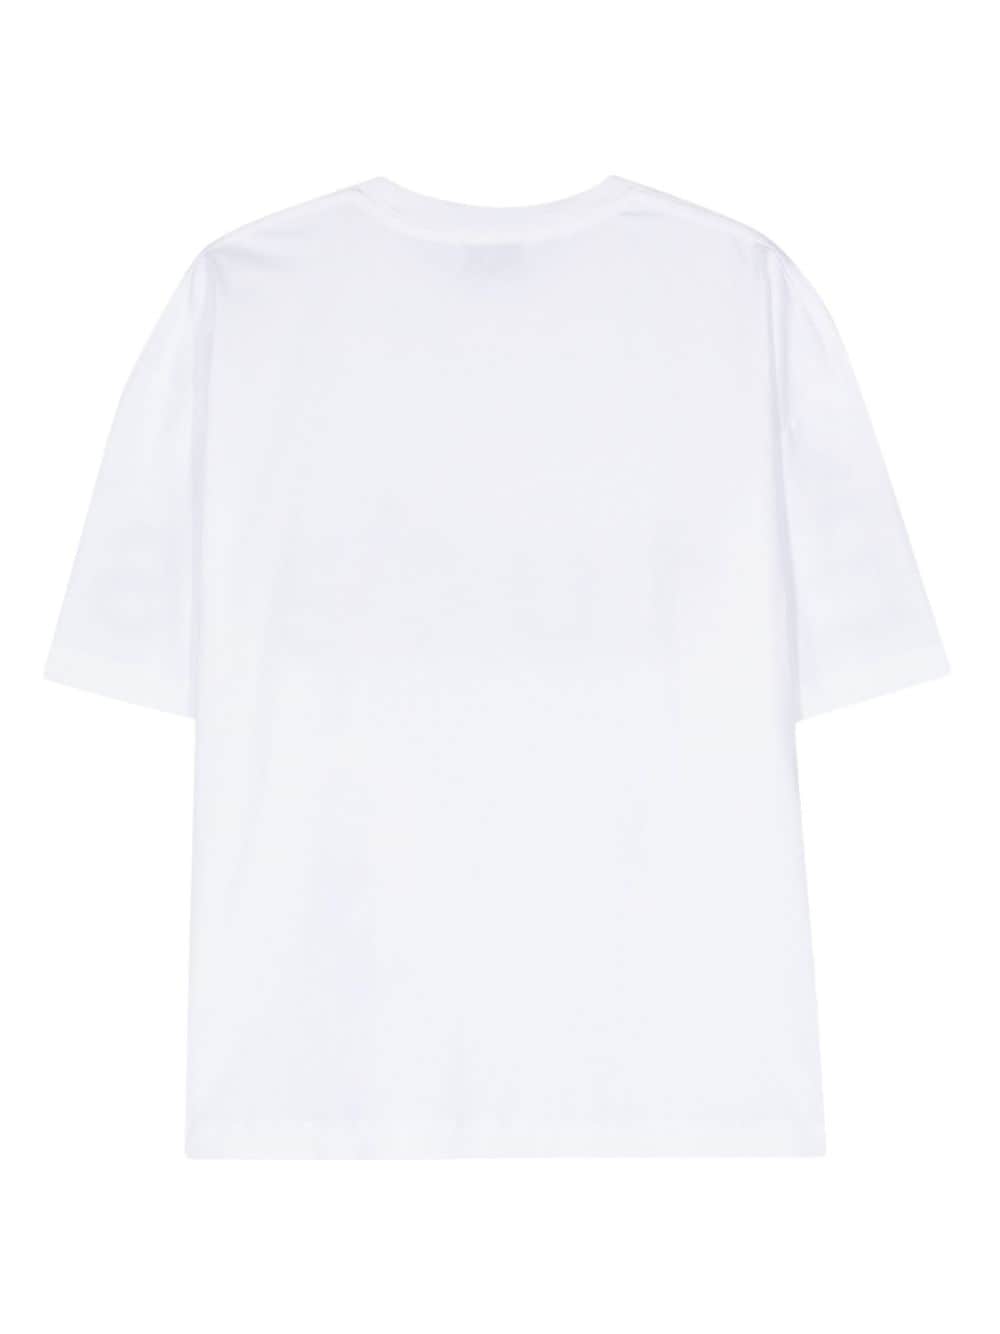 T-shirt bianca con scritta logo